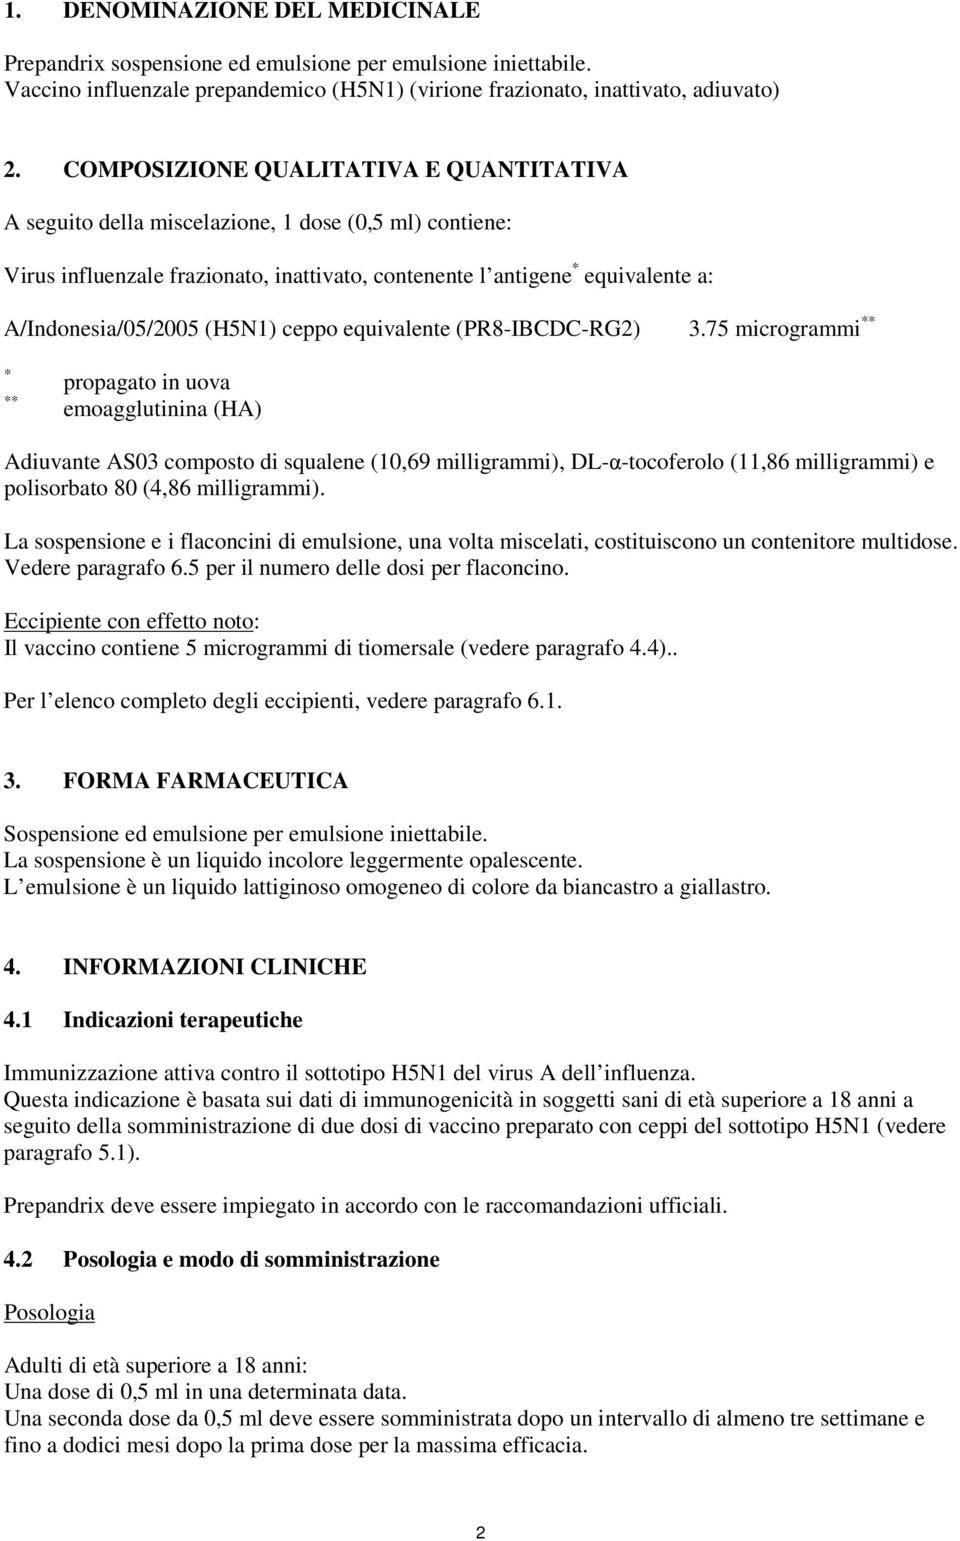 (H5N1) ceppo equivalente (PR8-IBCDC-RG2) 3.